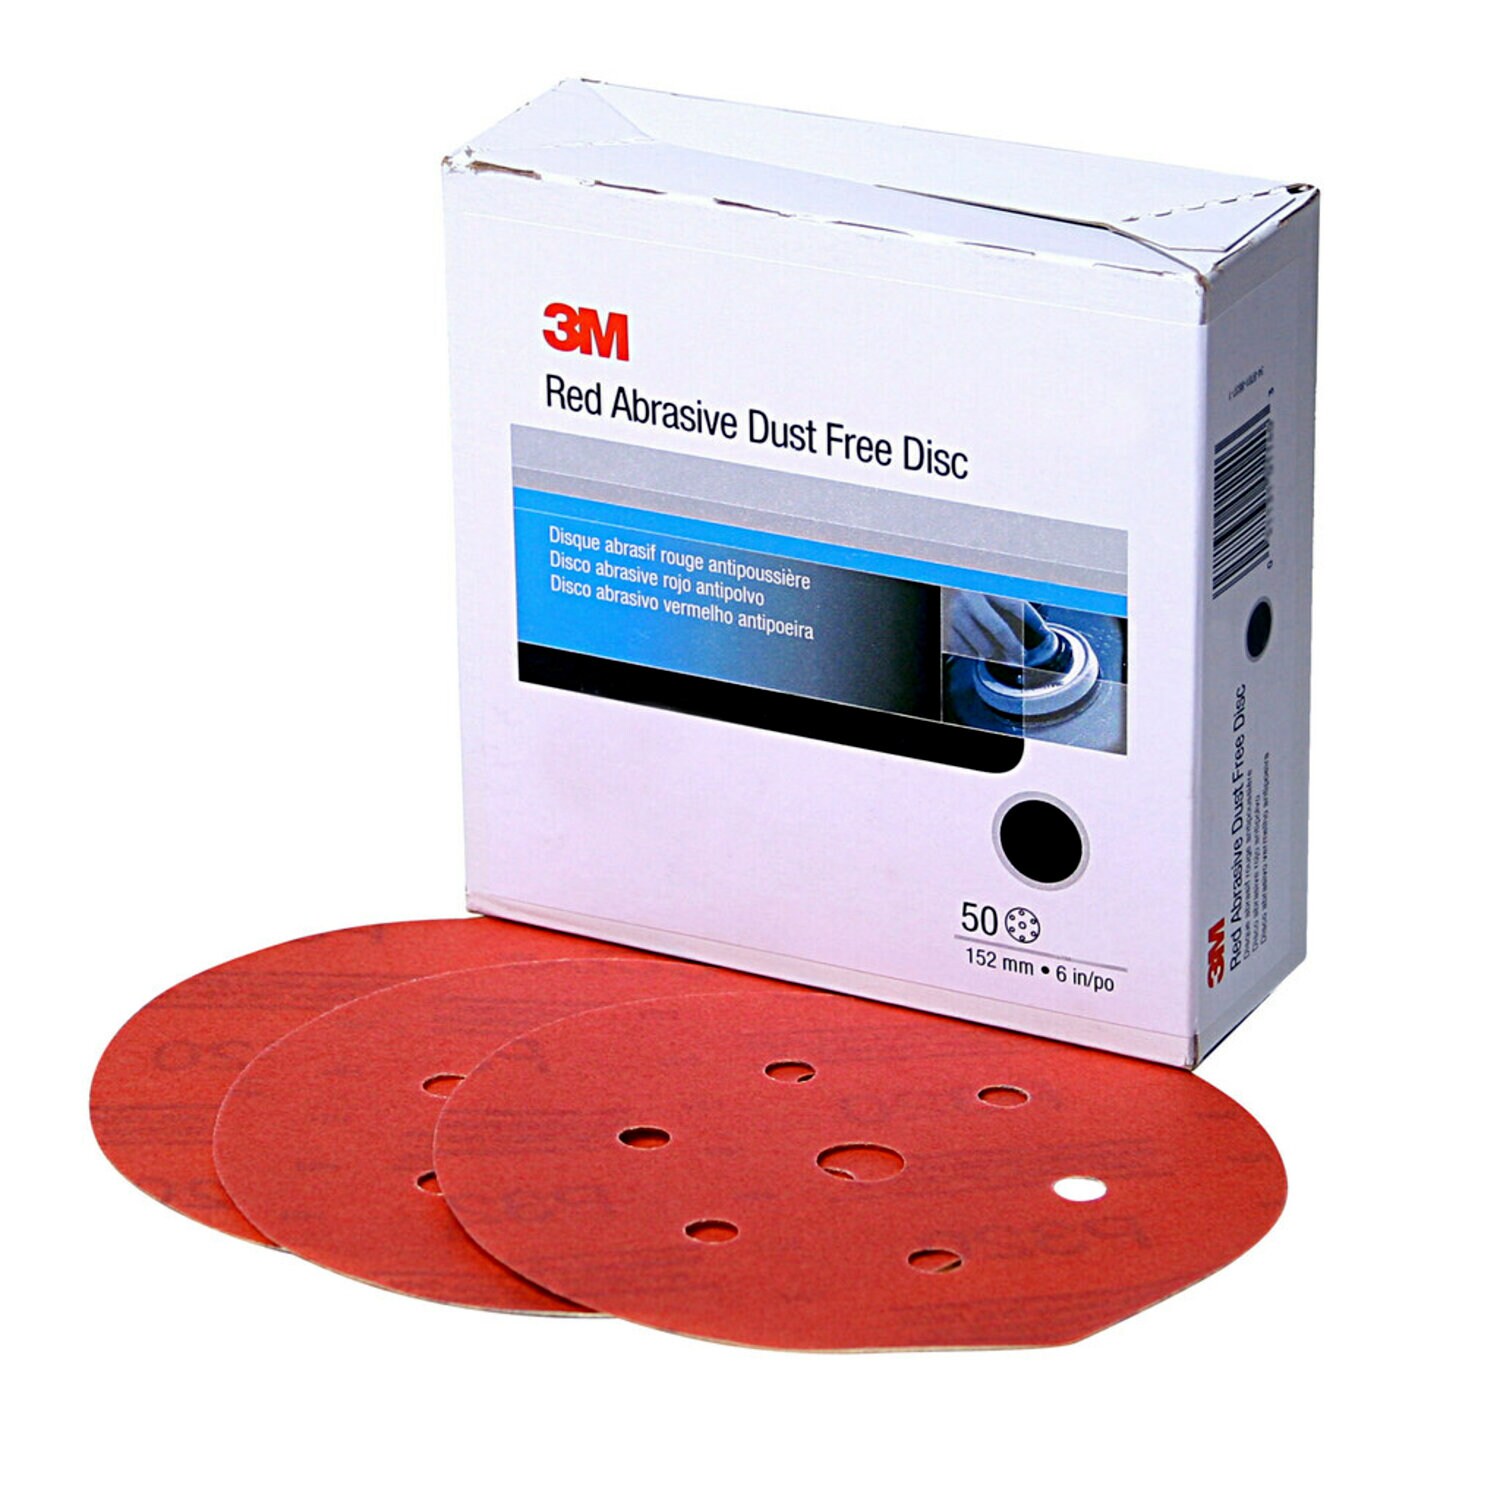 7000045456 - 3M Hookit Red Abrasive Disc Dust Free, 01141, 6 in, P240, 50 discs per
carton, 6 cartons per case